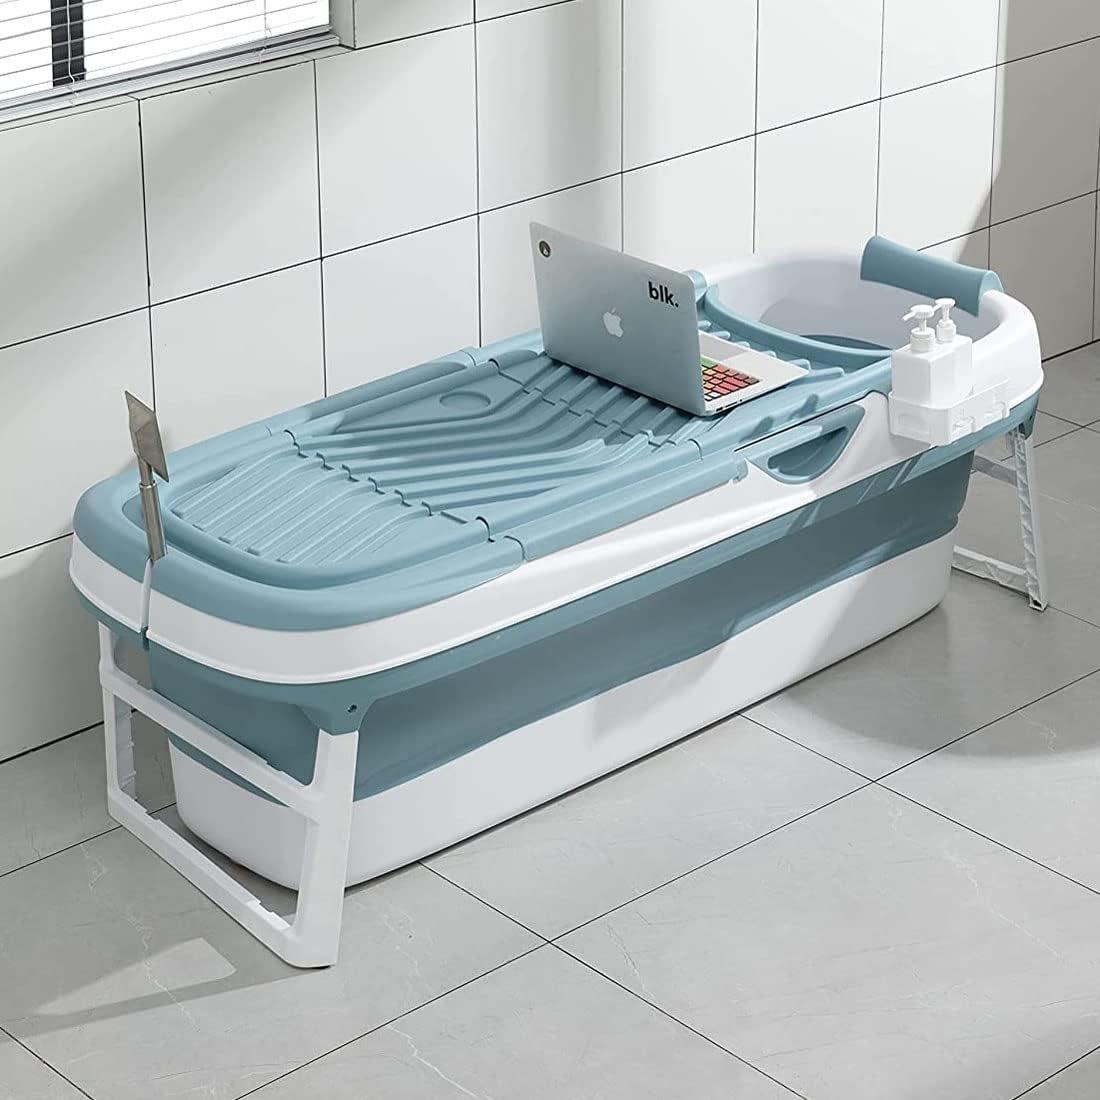 Portable Folding Shower Bathtub Adult Freestanding Bathtub for Small Bathrooms with Soap Basket